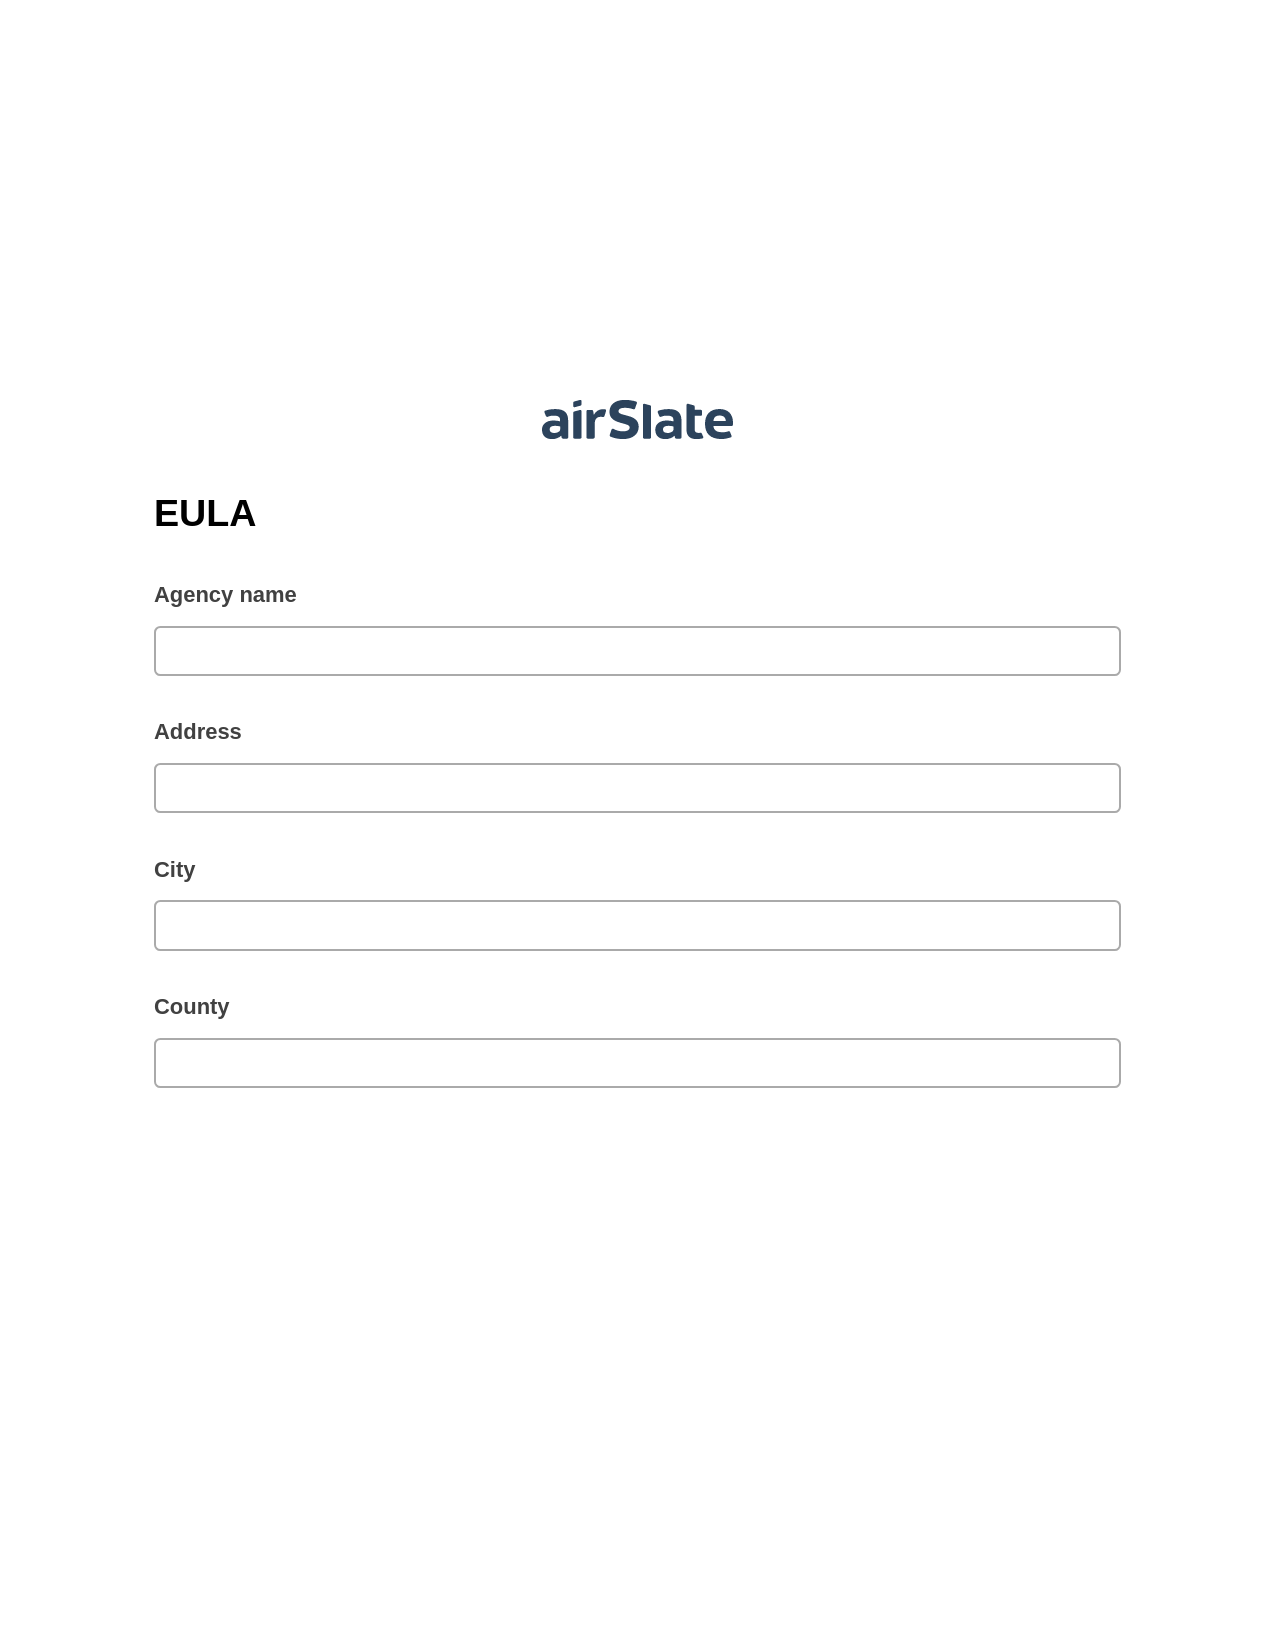 EULA Pre-fill from Google Sheet Dropdown Options Bot, Update NetSuite Records Bot, Dropbox Bot